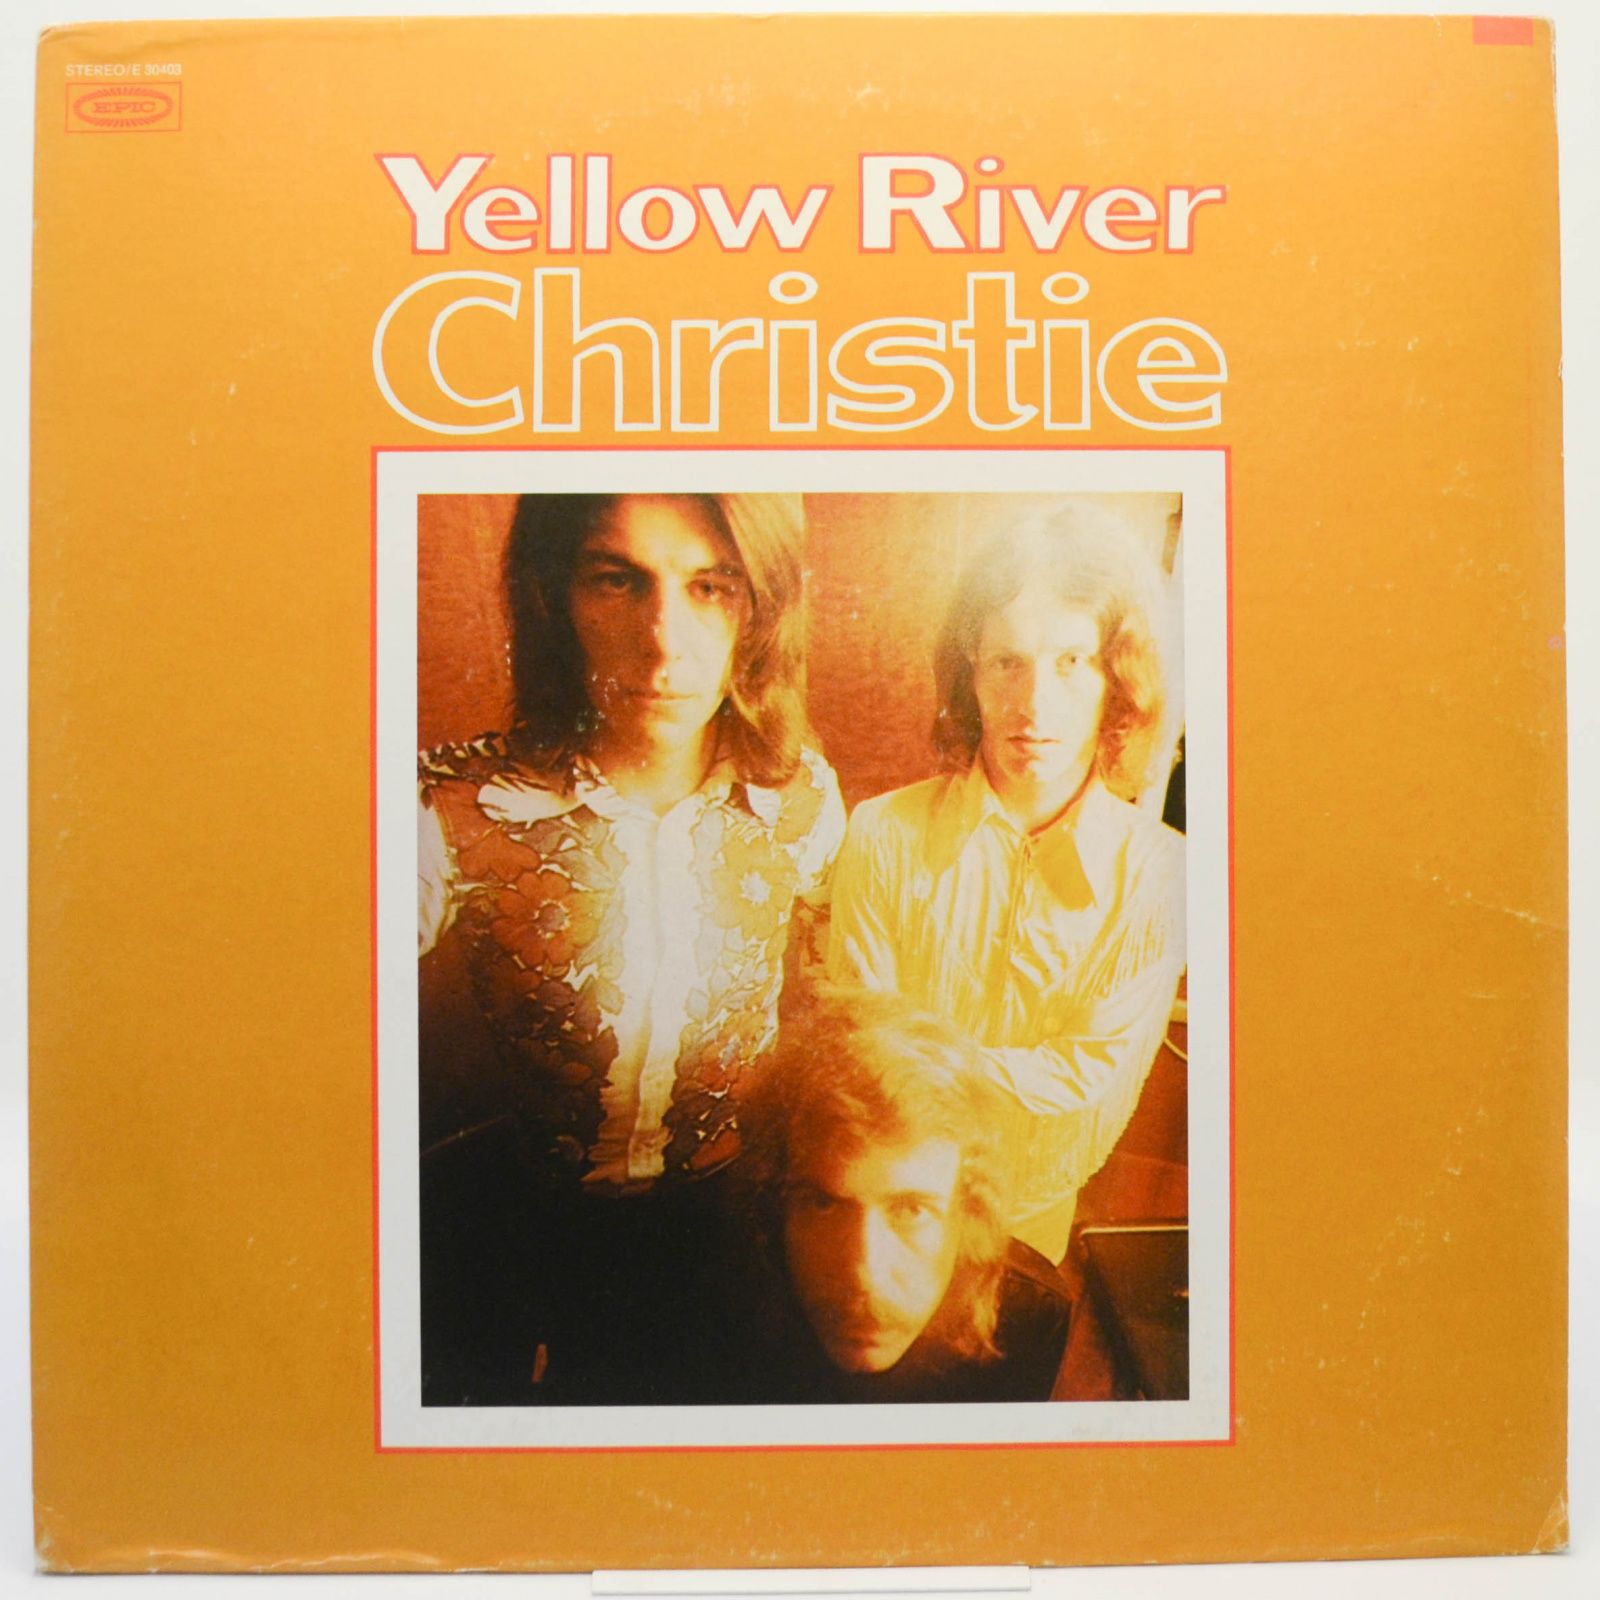 Christie — Yellow River, 1970